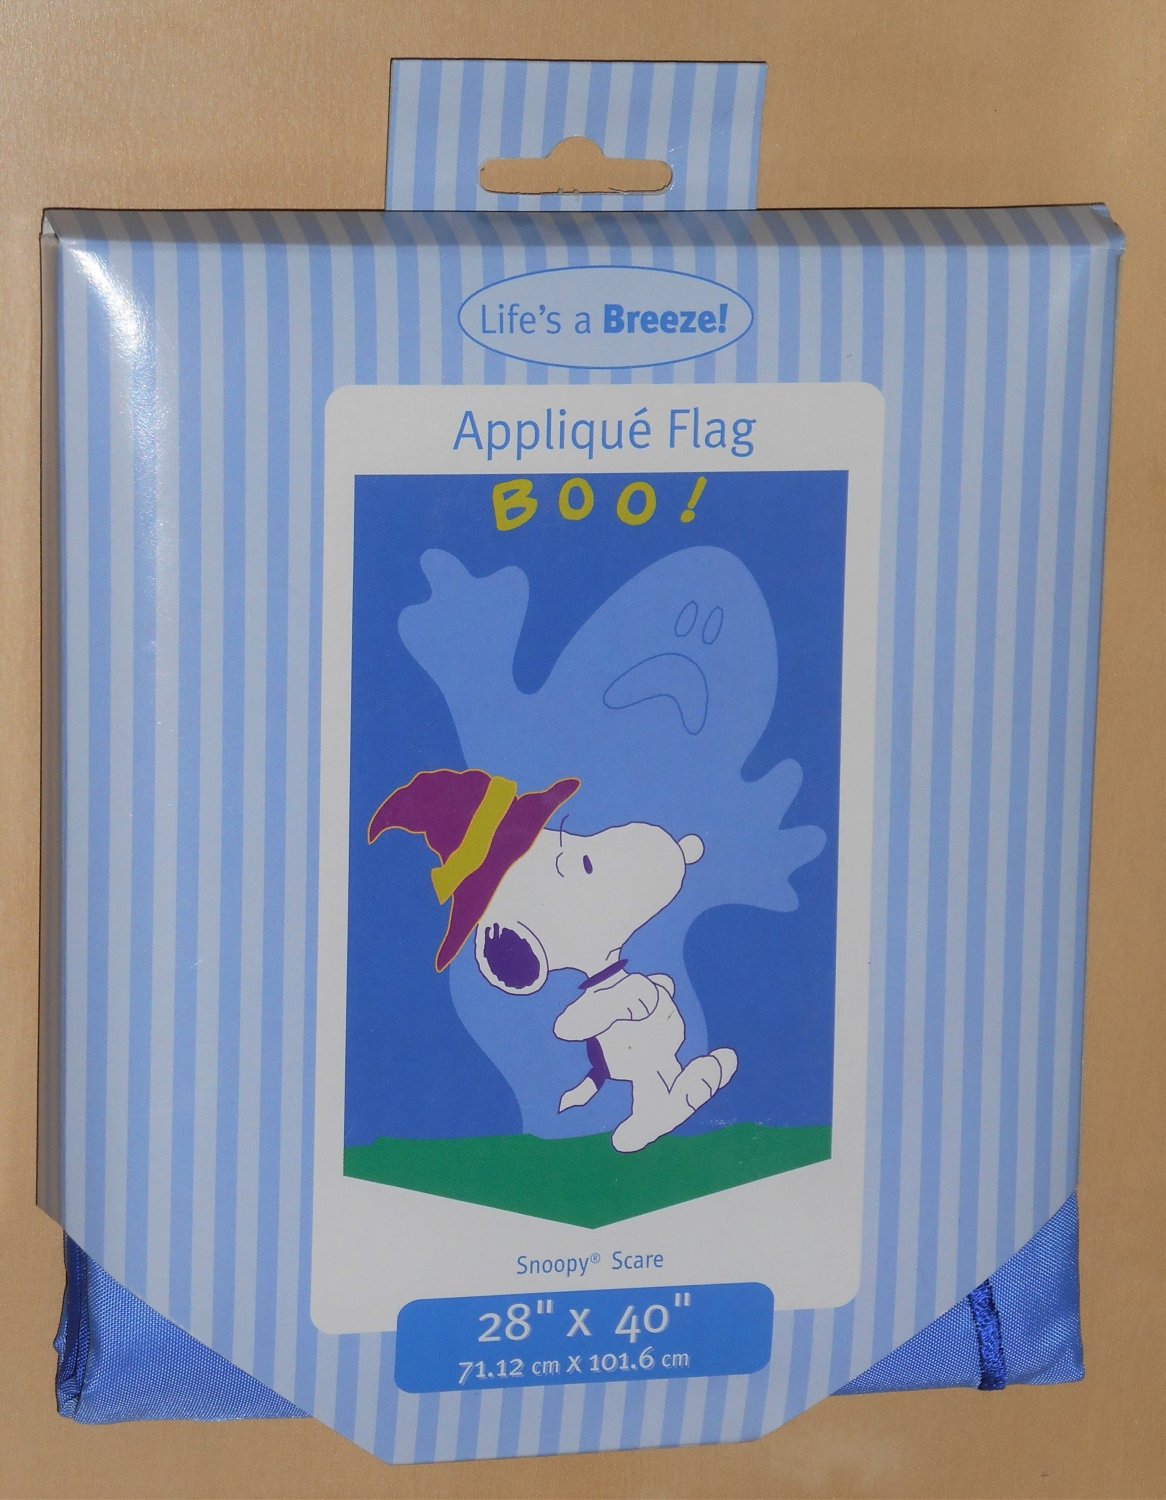 Snoopy Scare BOO Ghost Garden Pole Flag 28 x 40 Polyester Applique Life's A Breeze 03621 NEW